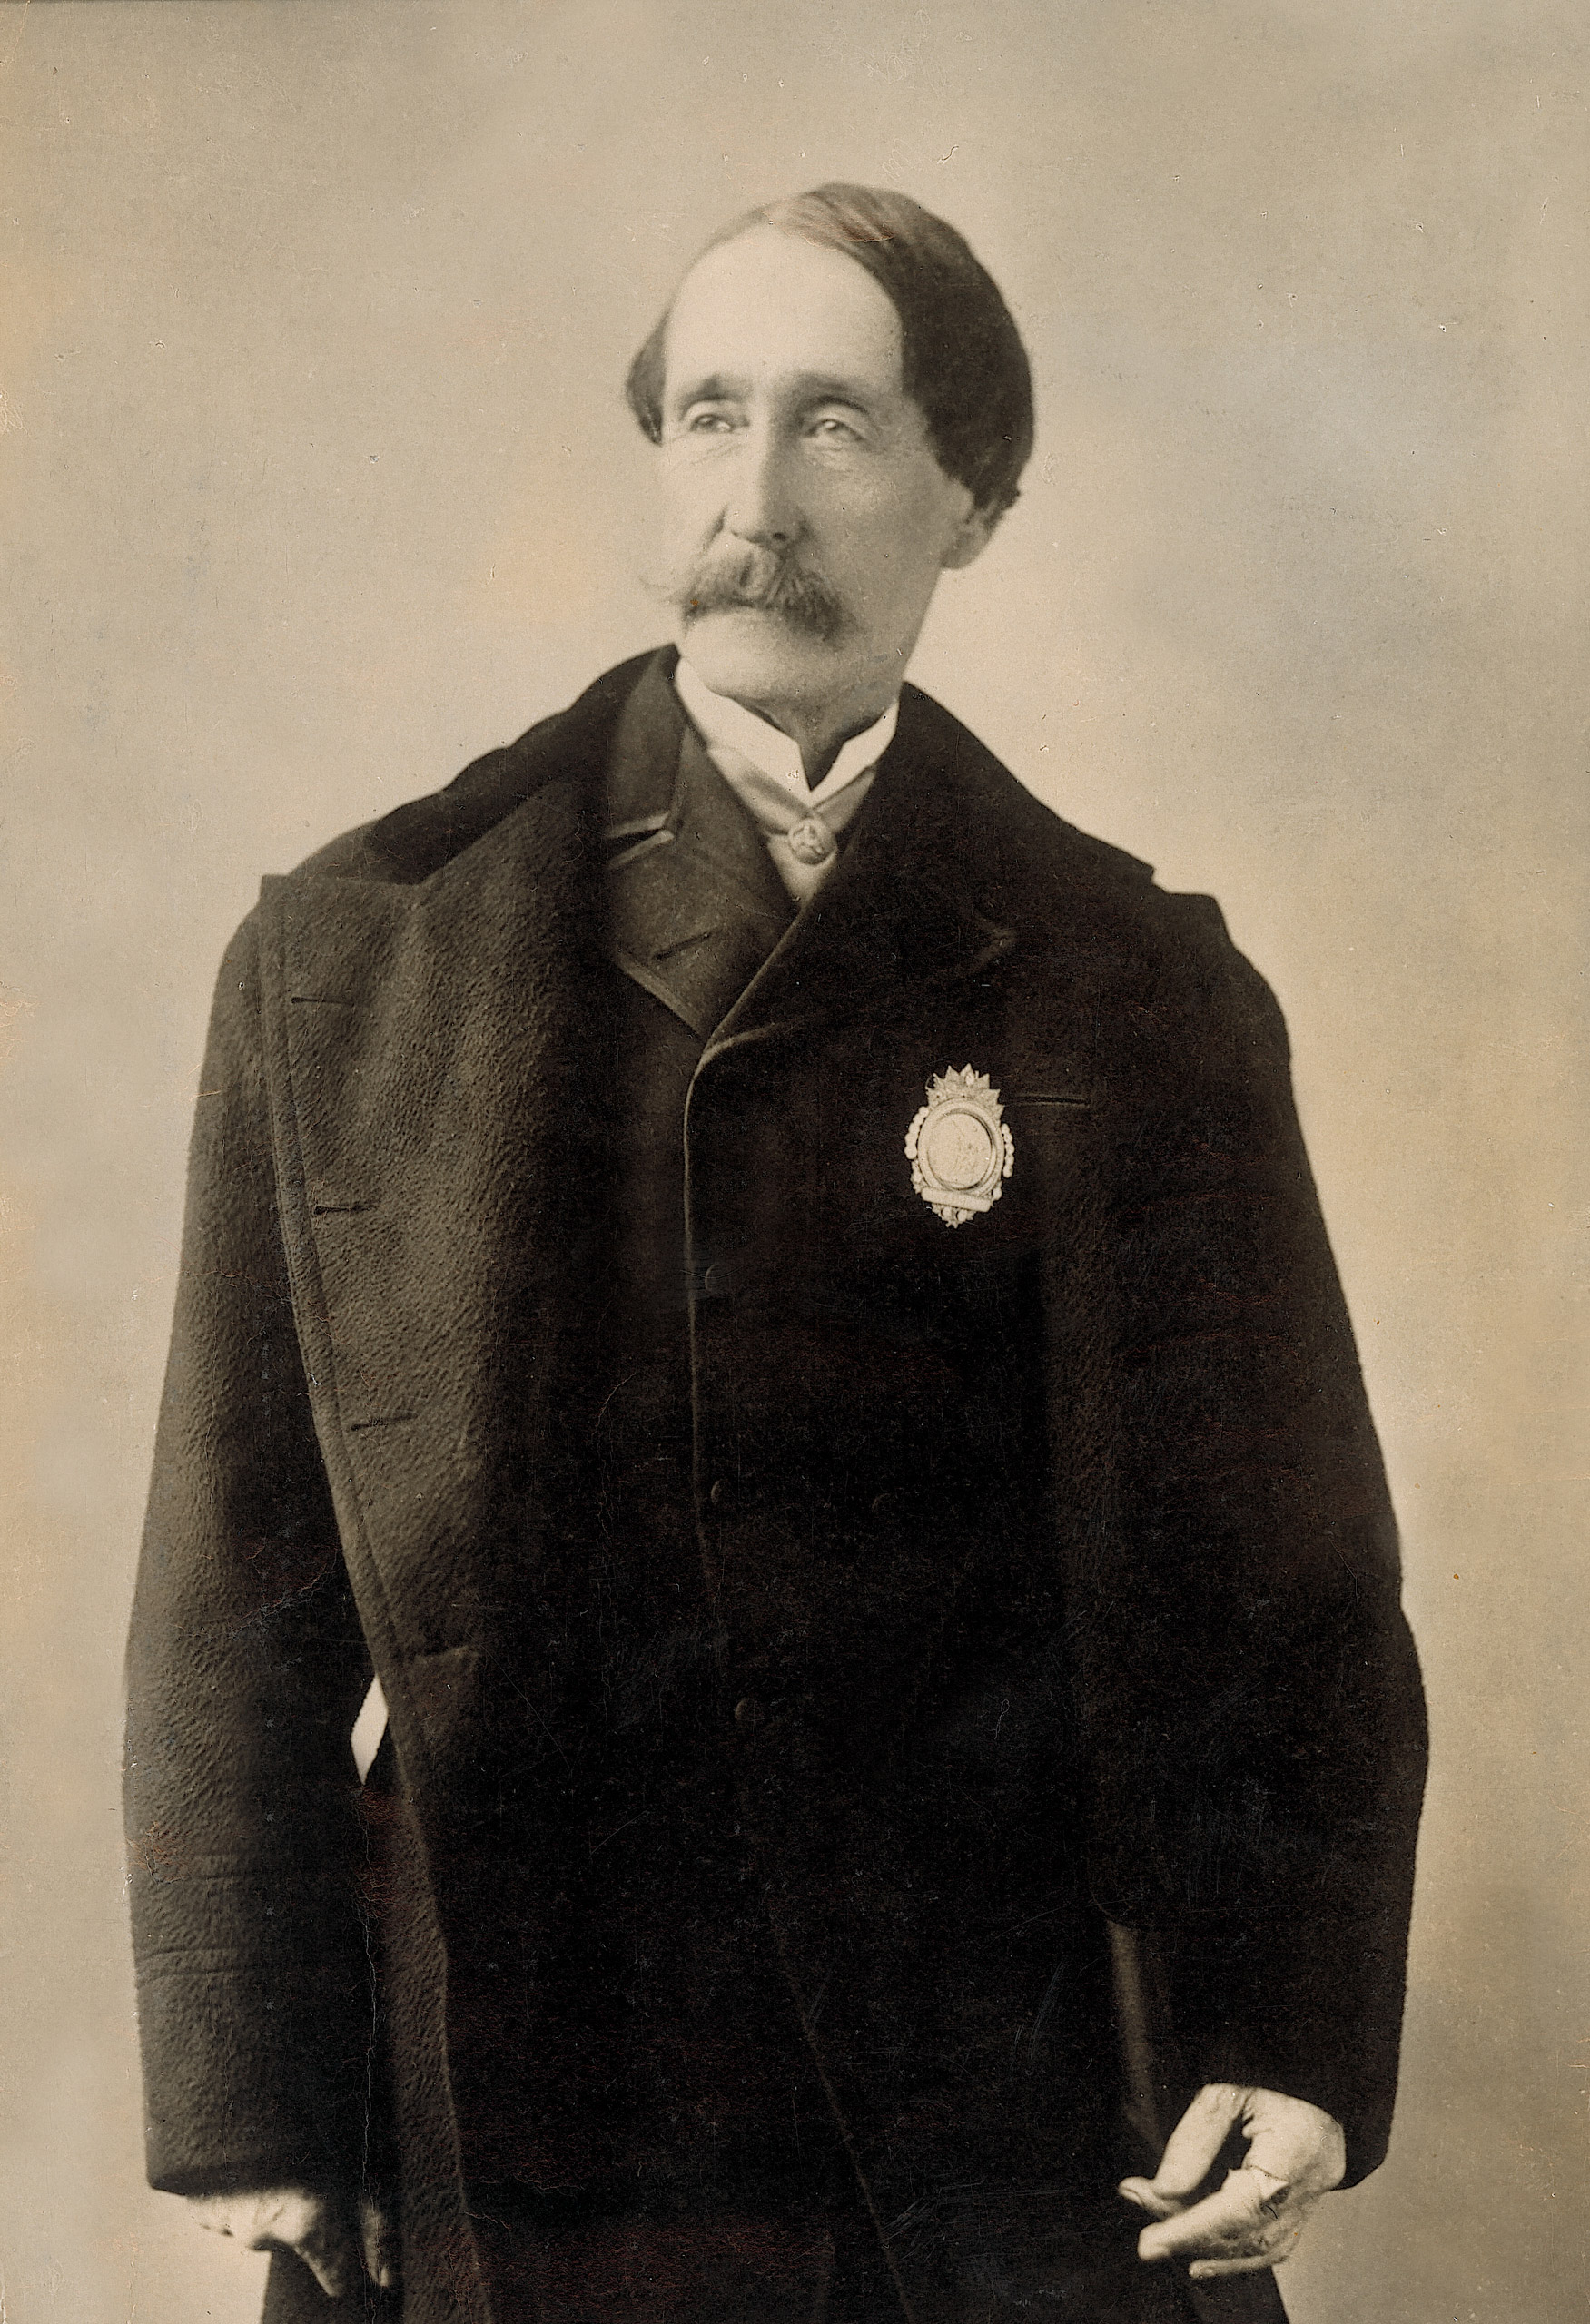 ASPCA founder, Henry Bergh, wearing ASPCA President’s badge, 1868